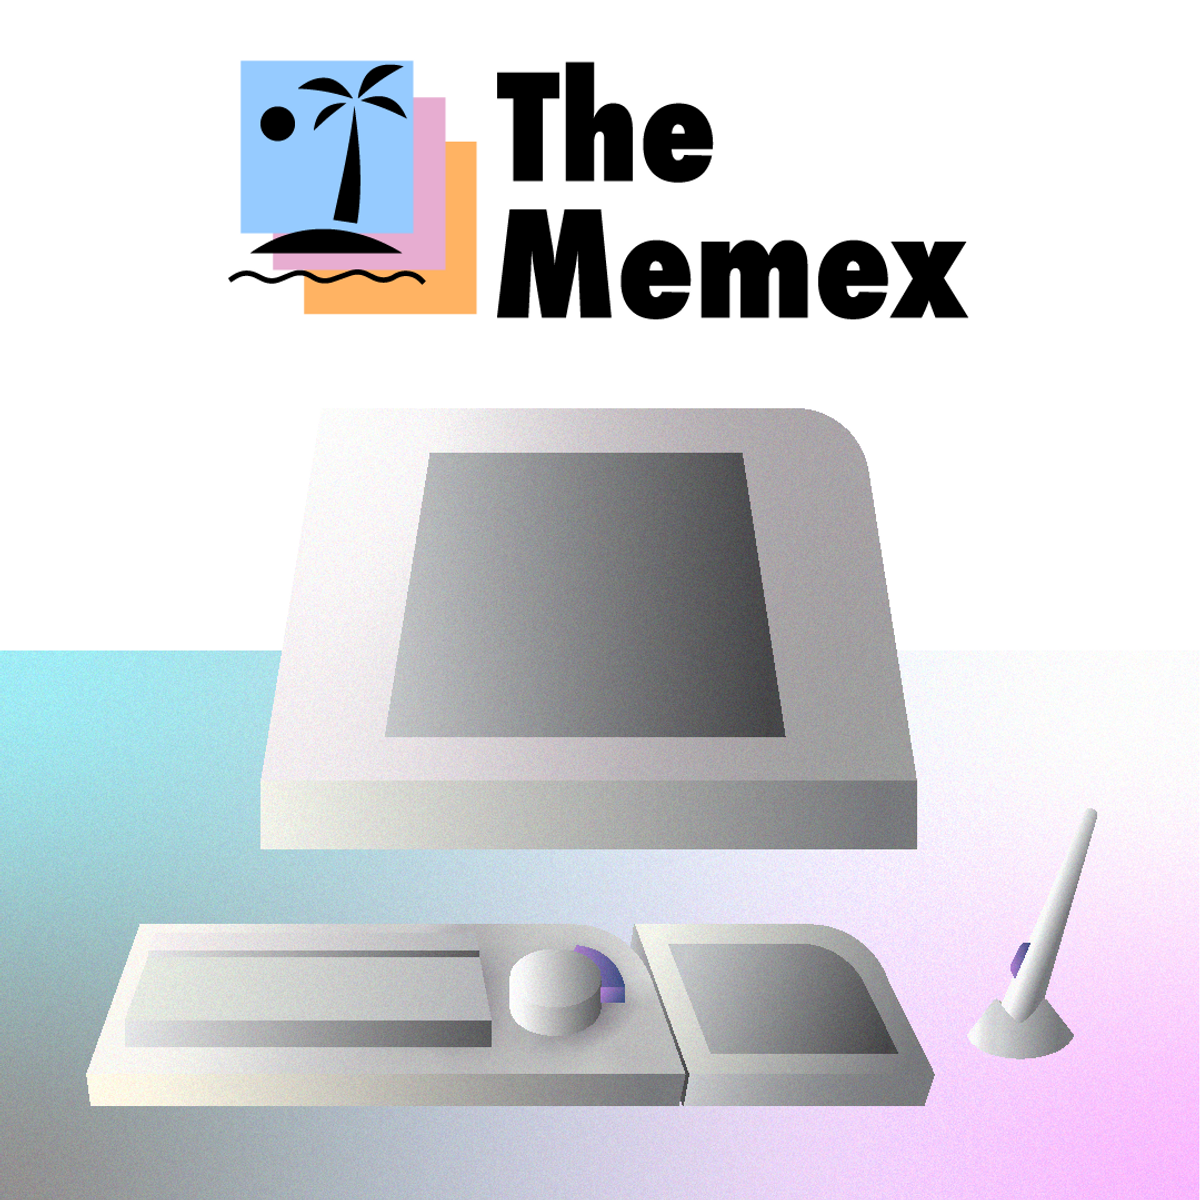 Memex illustration